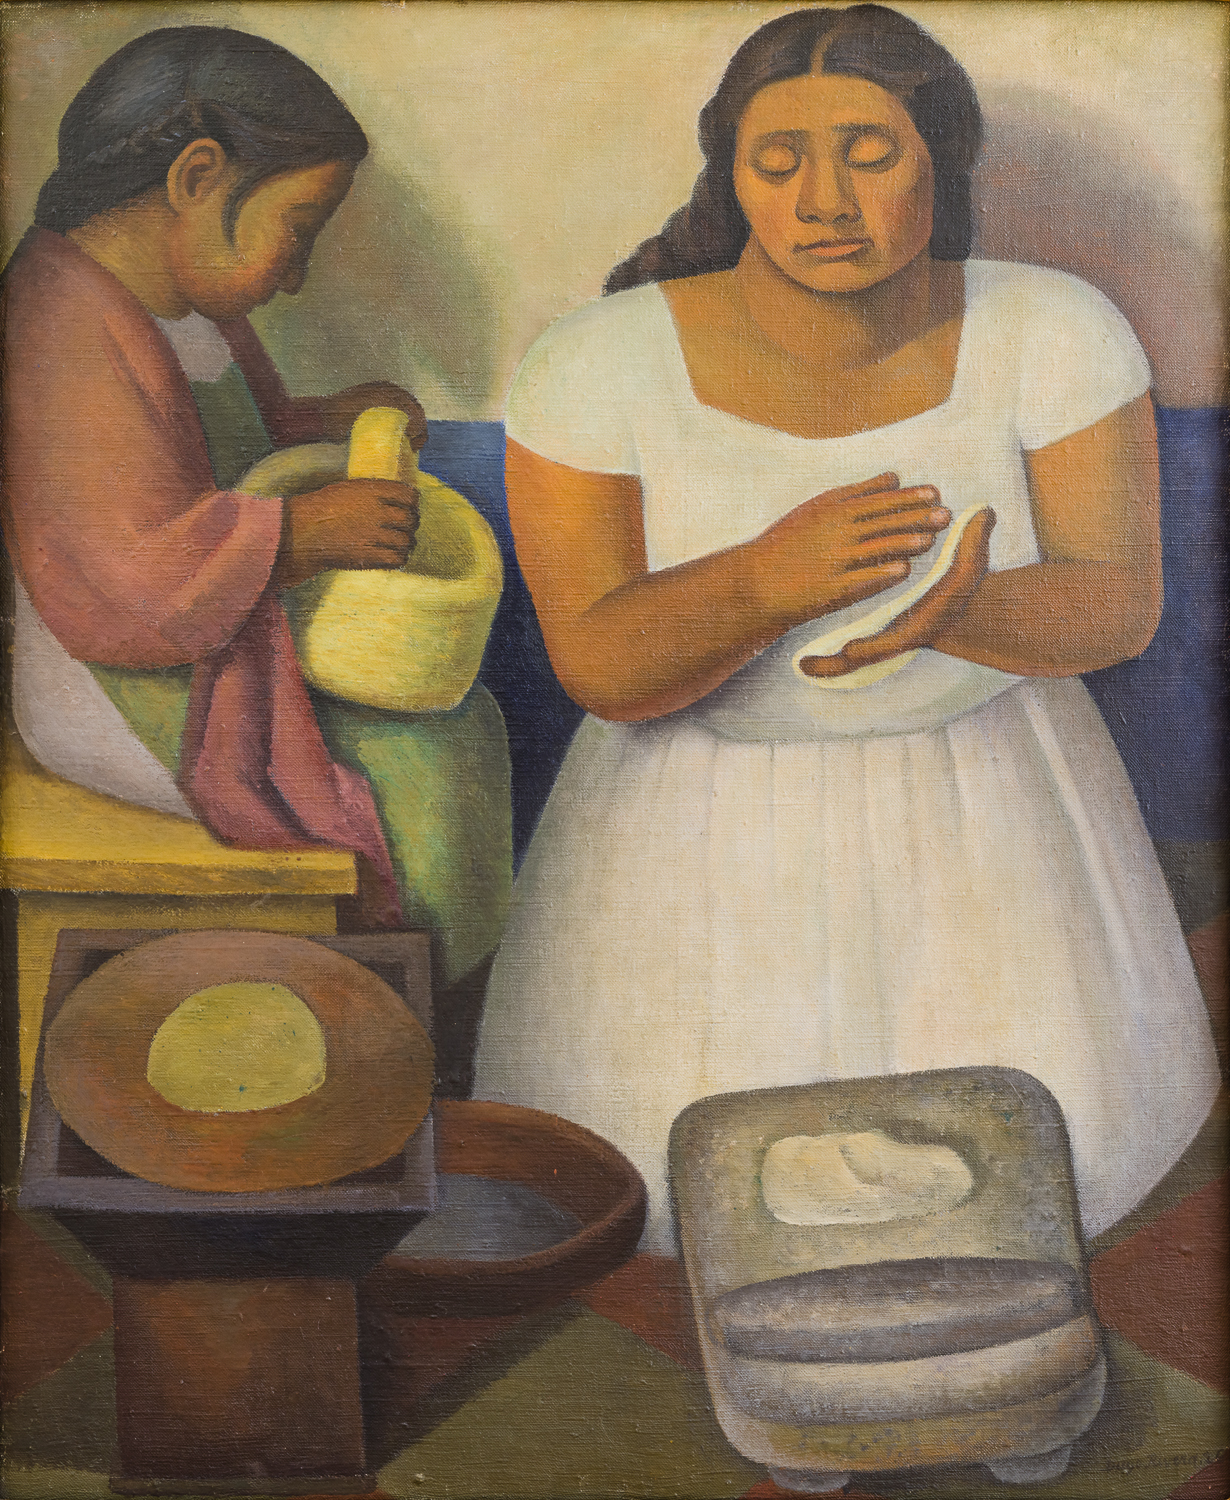 "La Tortillera" by Diego Rivera